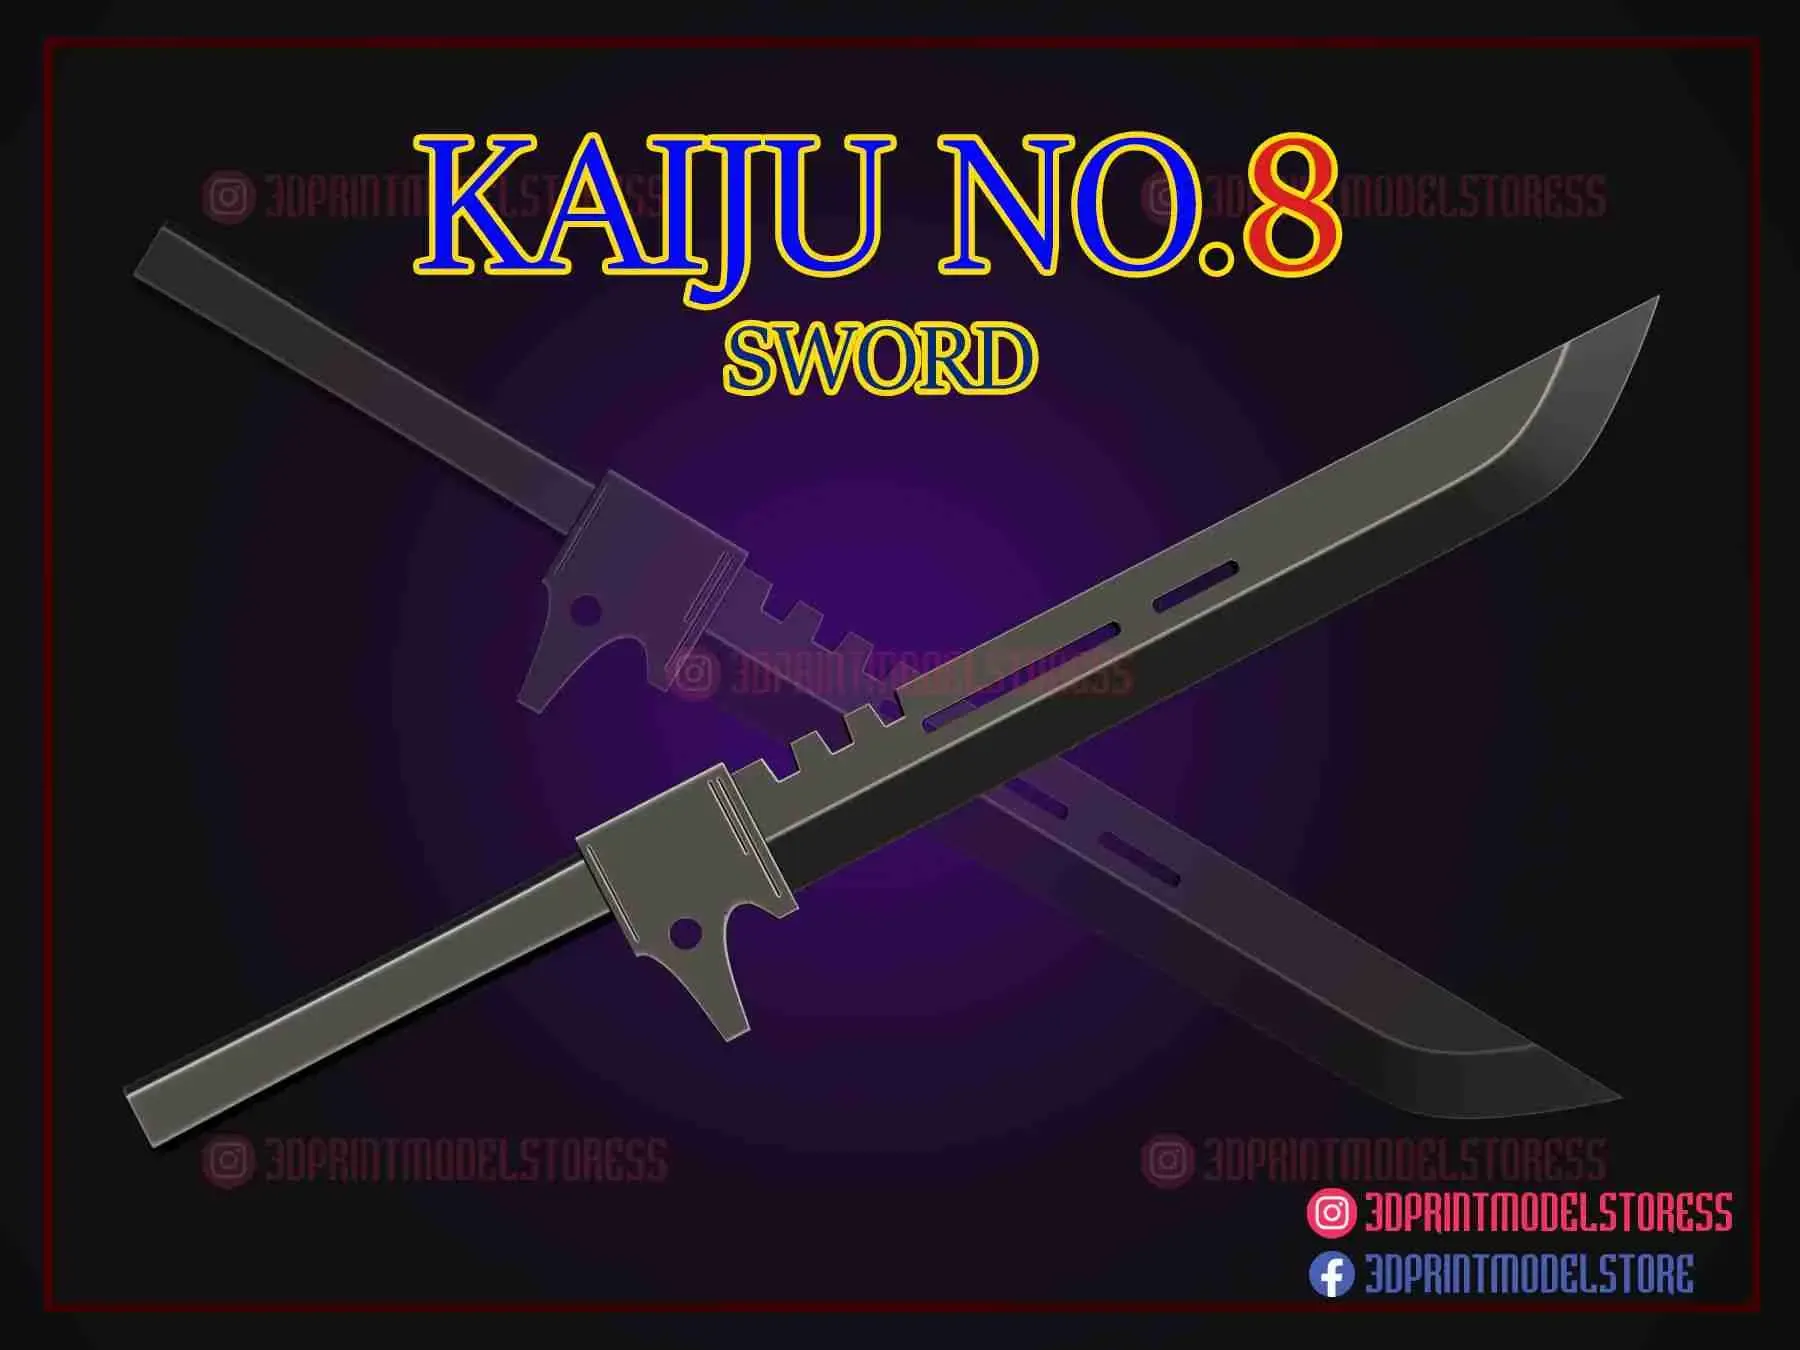 Kaiju No.8 Sword - Anime Cosplay Weapon